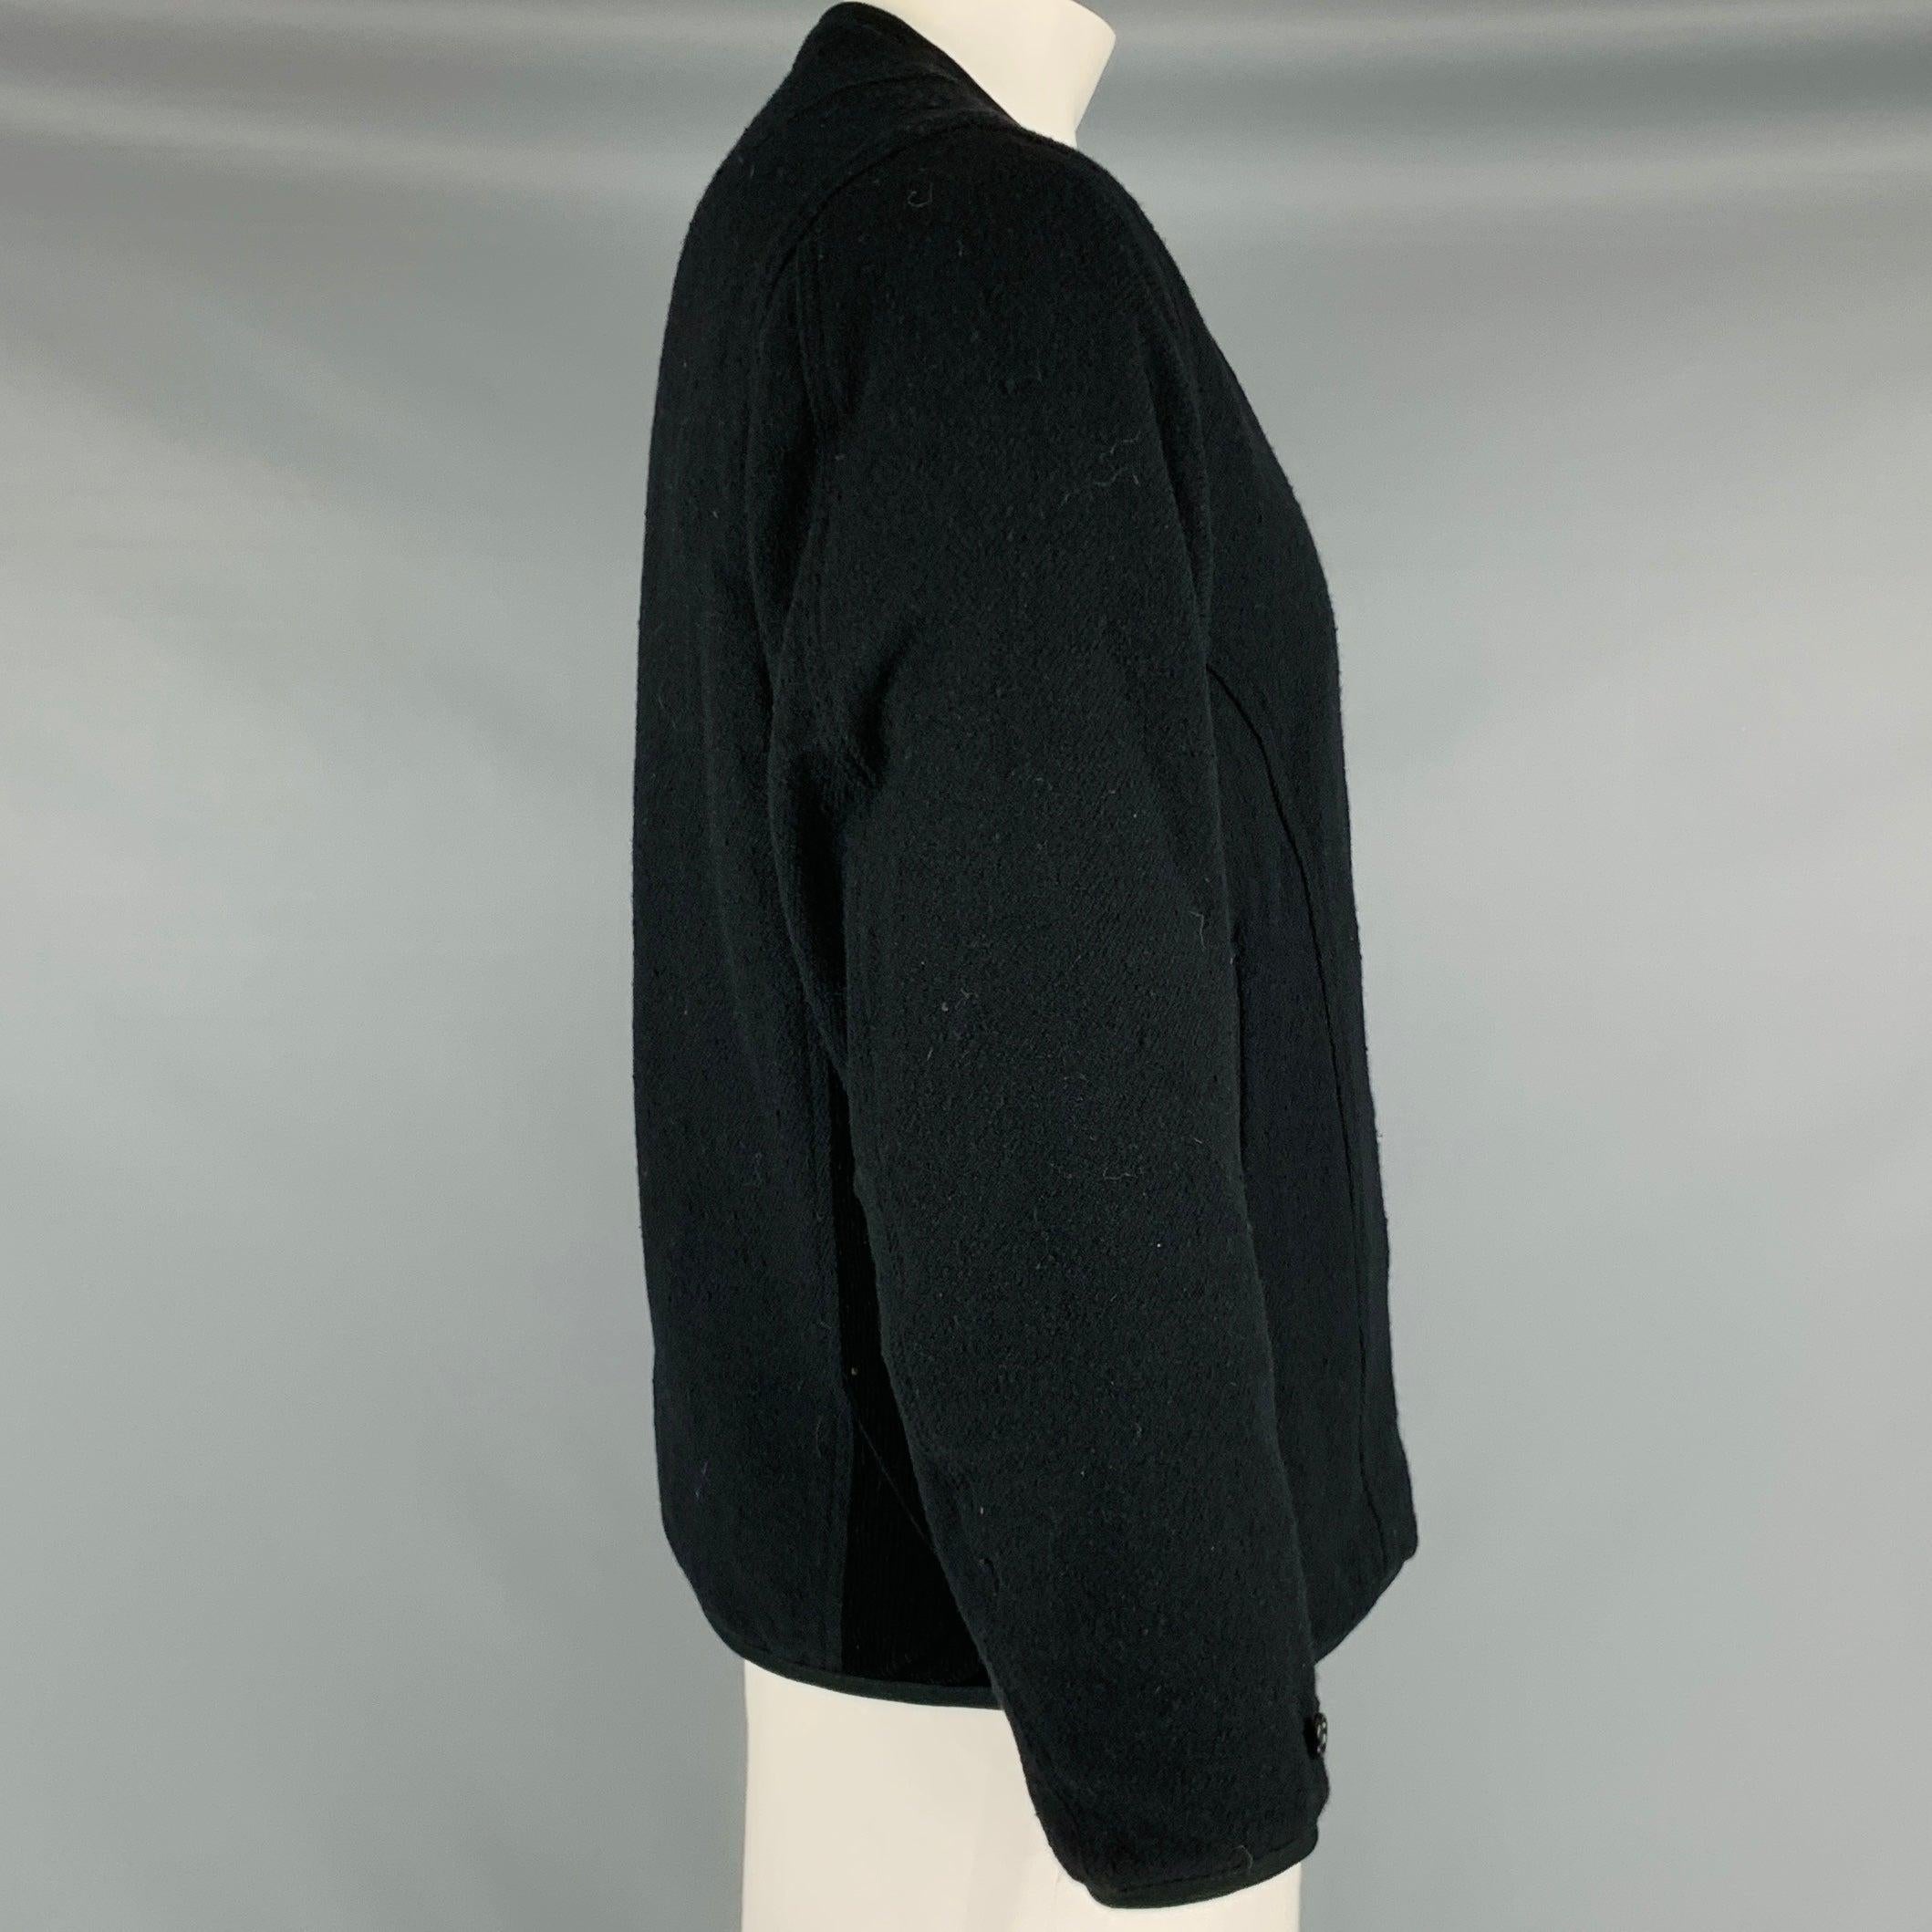 VISVIM -Wawona Down Jacket -Size L Black Beige Tweed Wool Linen Zip Up Coat Pour hommes en vente